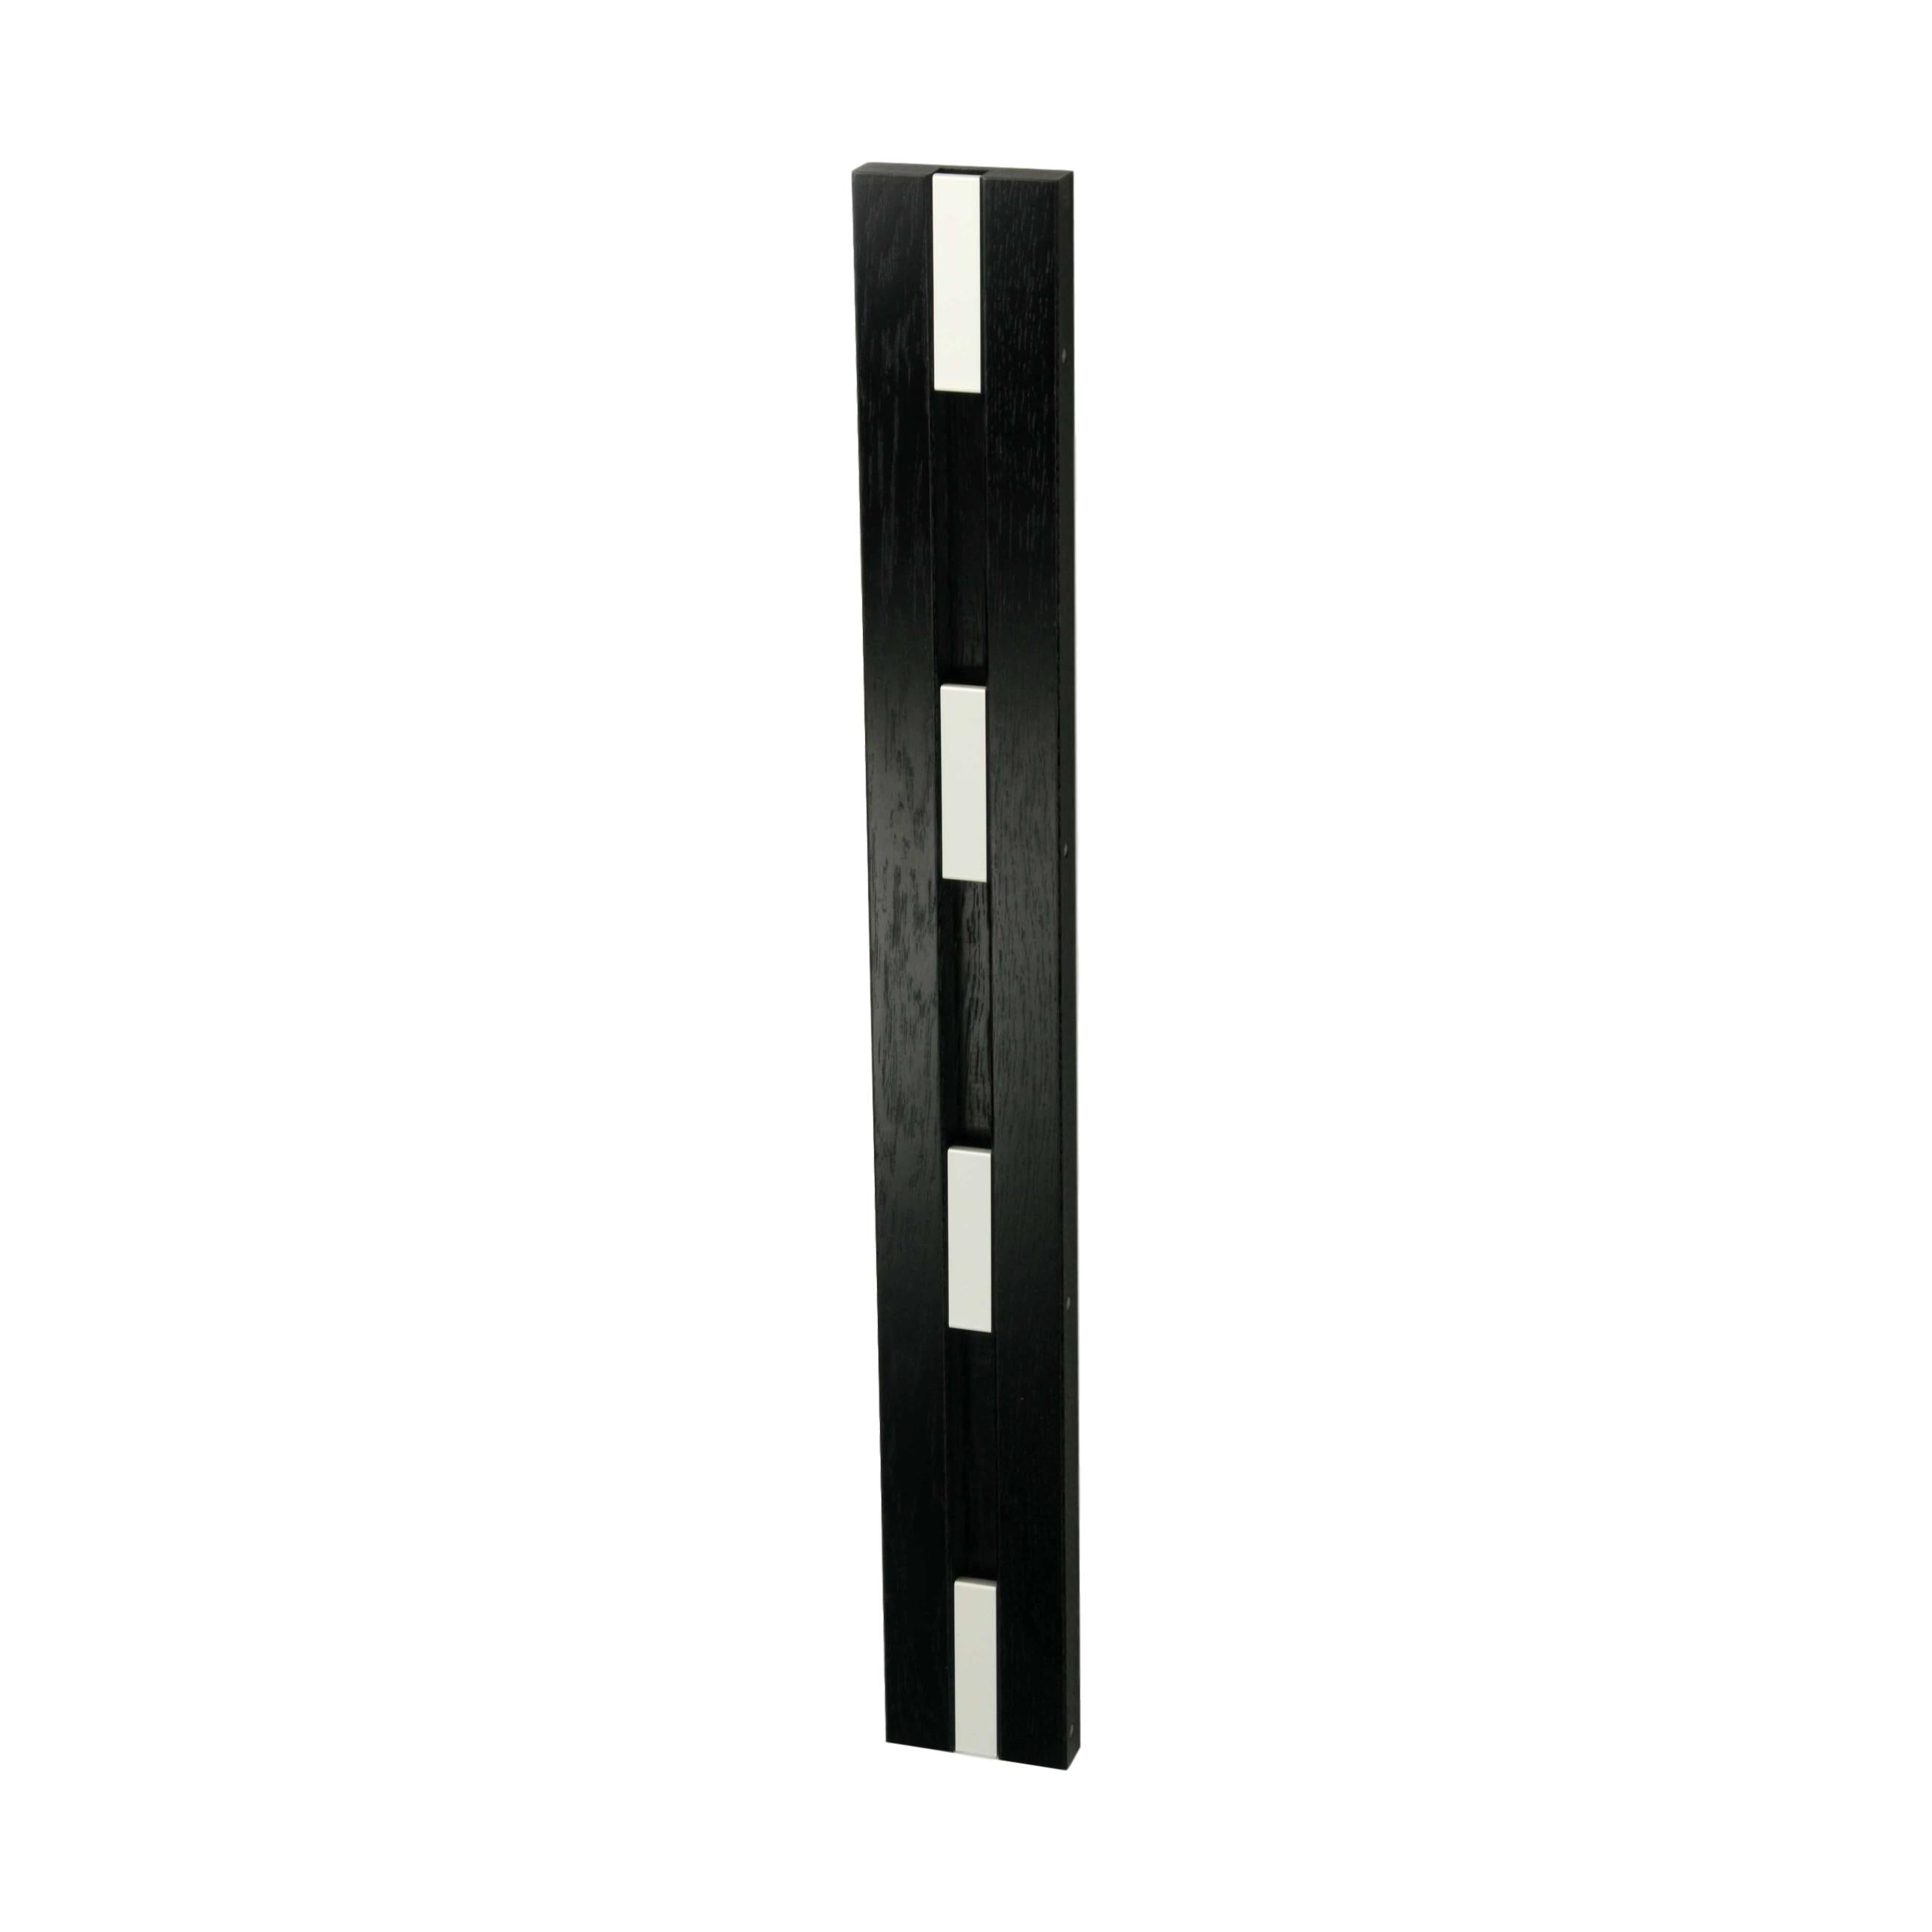 Loca Knax Vertical Coat Rack, colorato nero in quercia/grigio